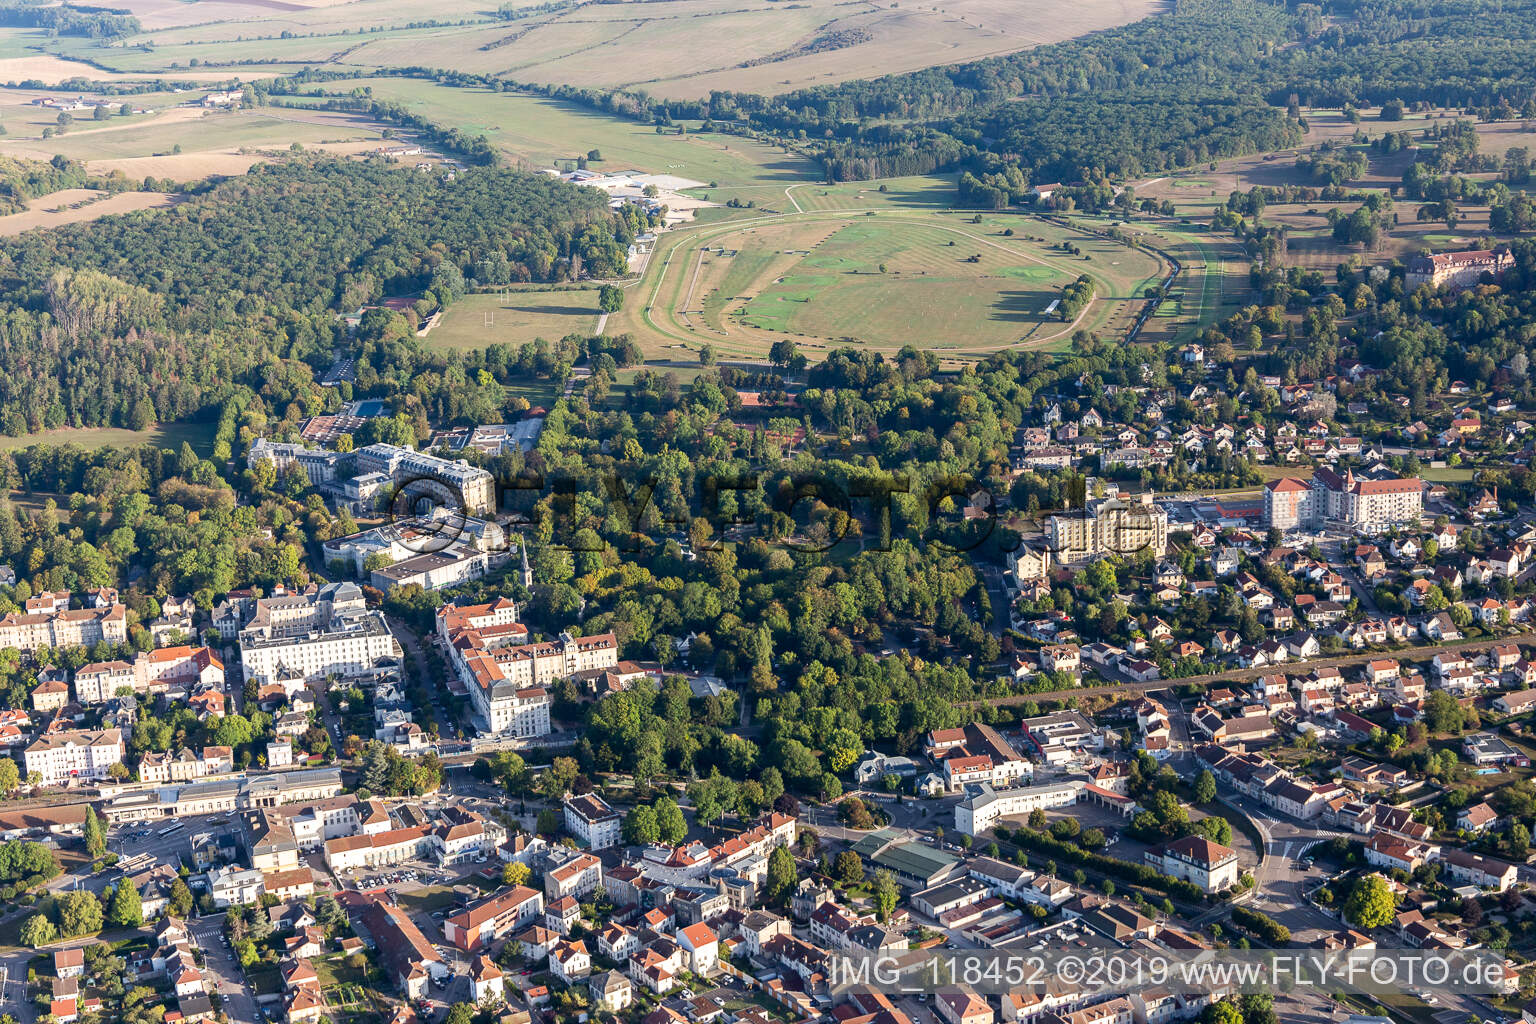 Courses Hippiques in Vittel im Bundesland Vosges, Frankreich